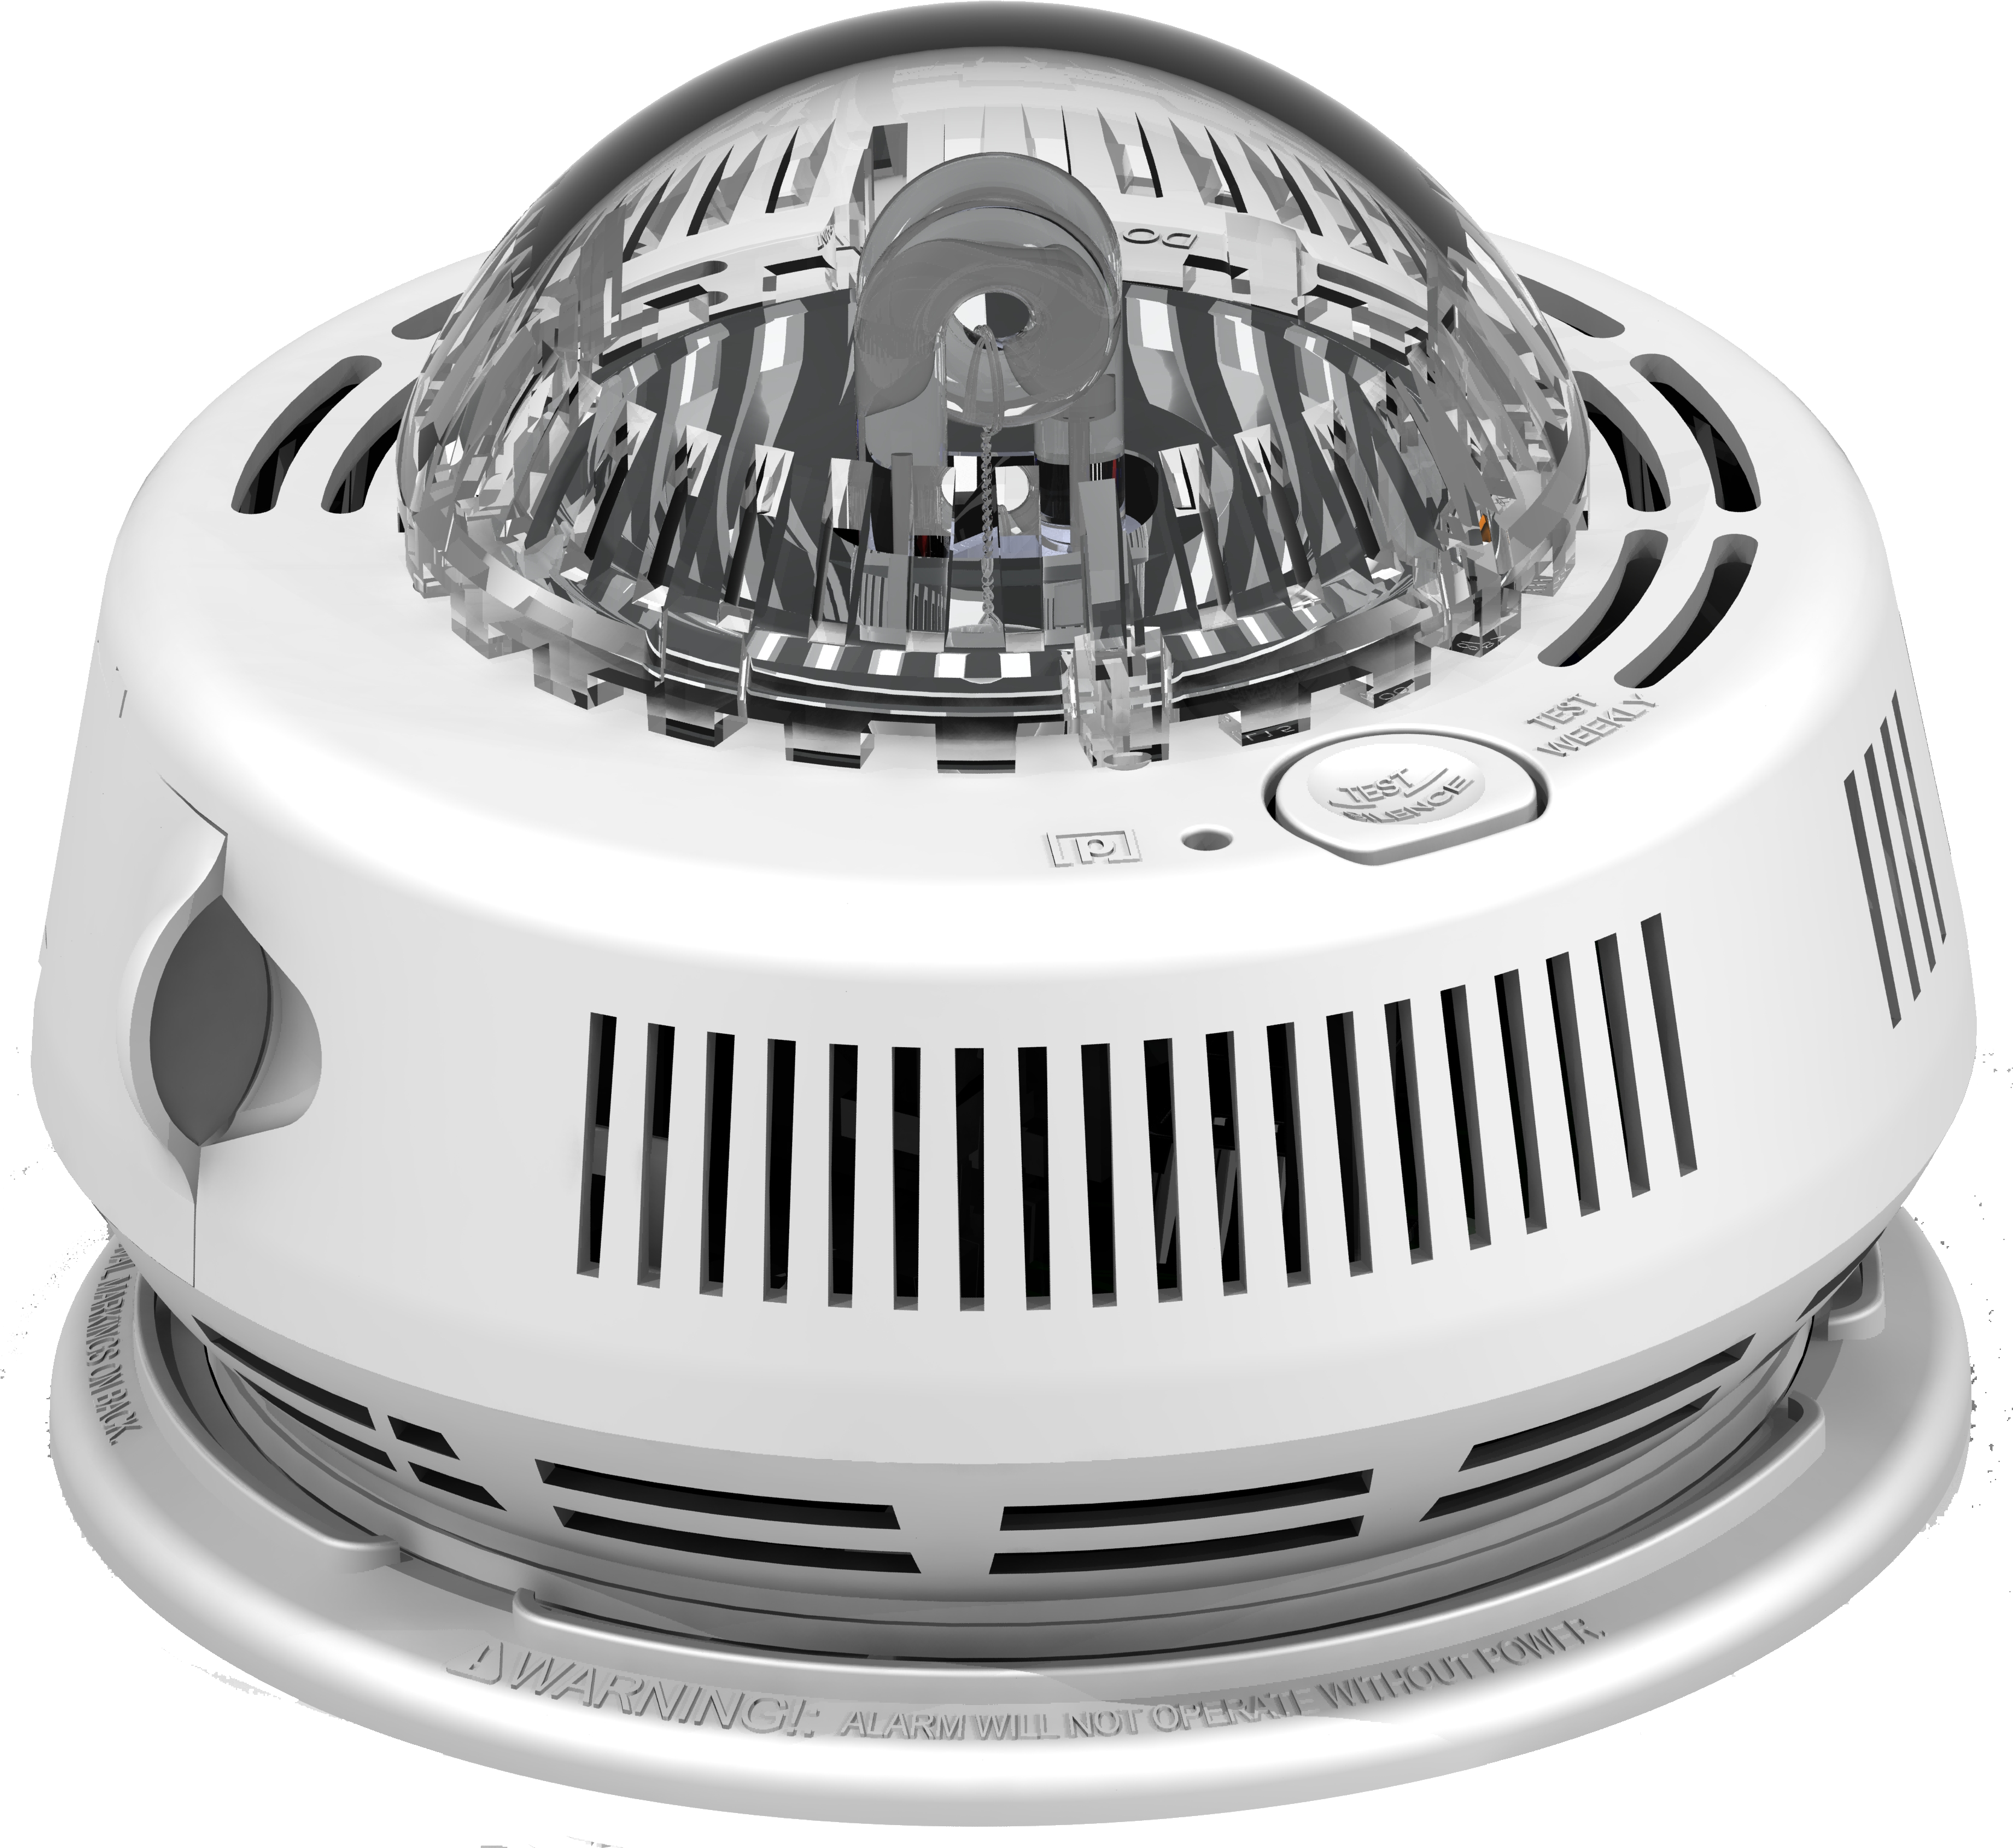 Brk Sl177 120v Ac Ada Compliant Smart Strobe - First Alert Smoke Alarm With Strobe Light (480x455), Png Download